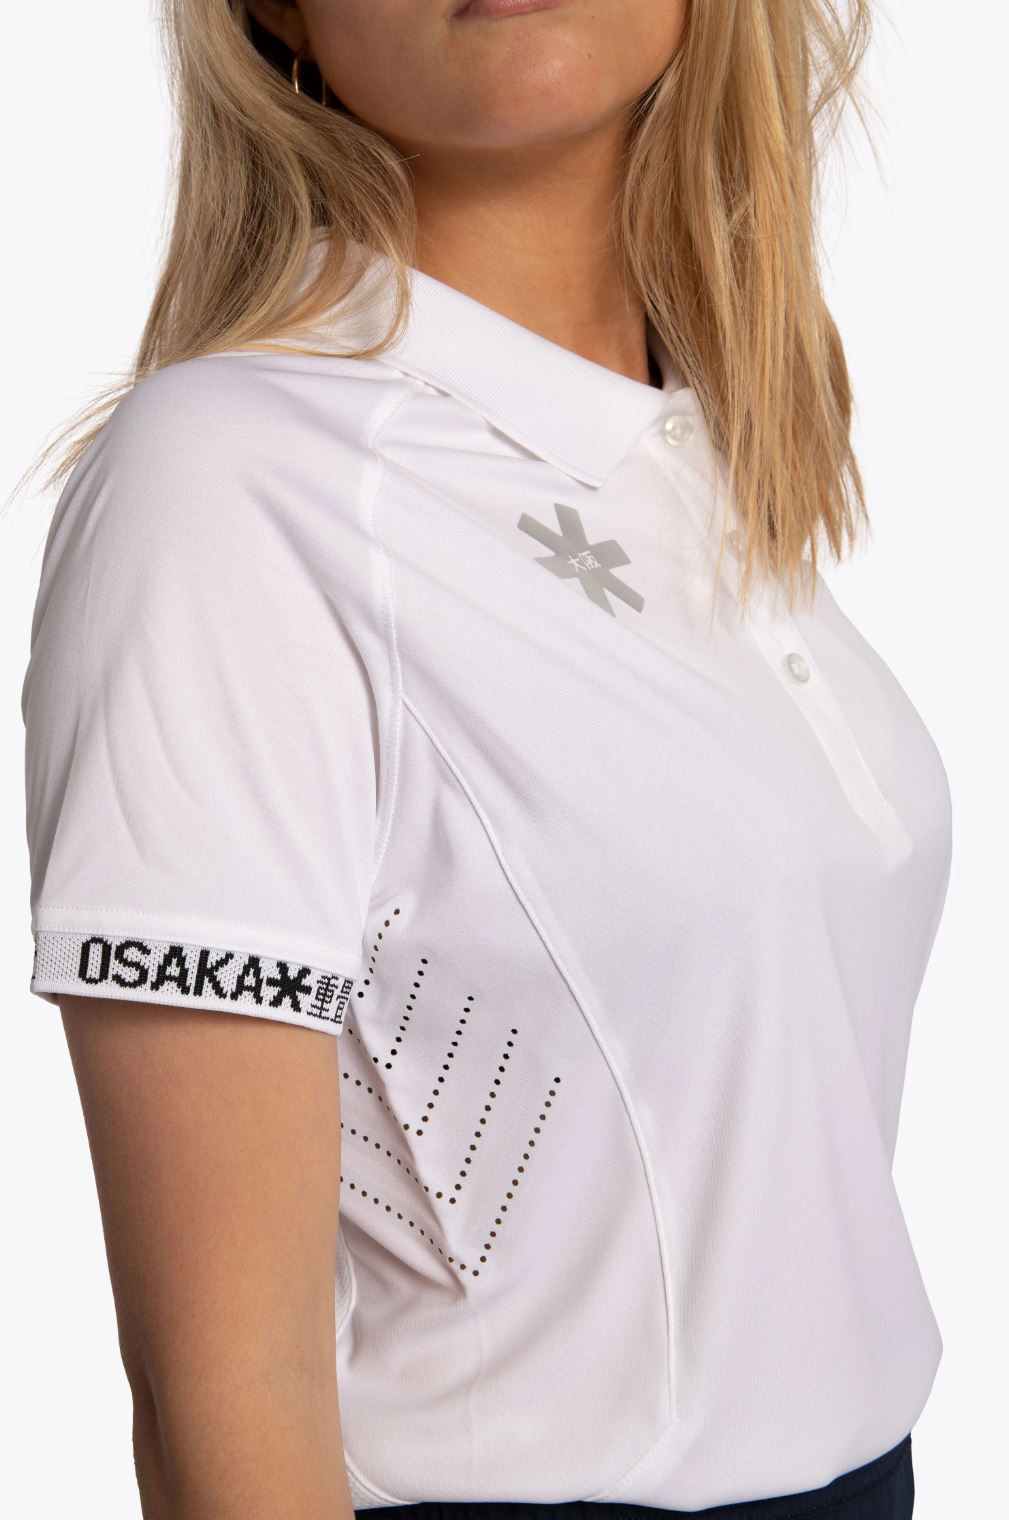 Se Osaka Women's Polo Jersey (Hvid) - L hos Padellife